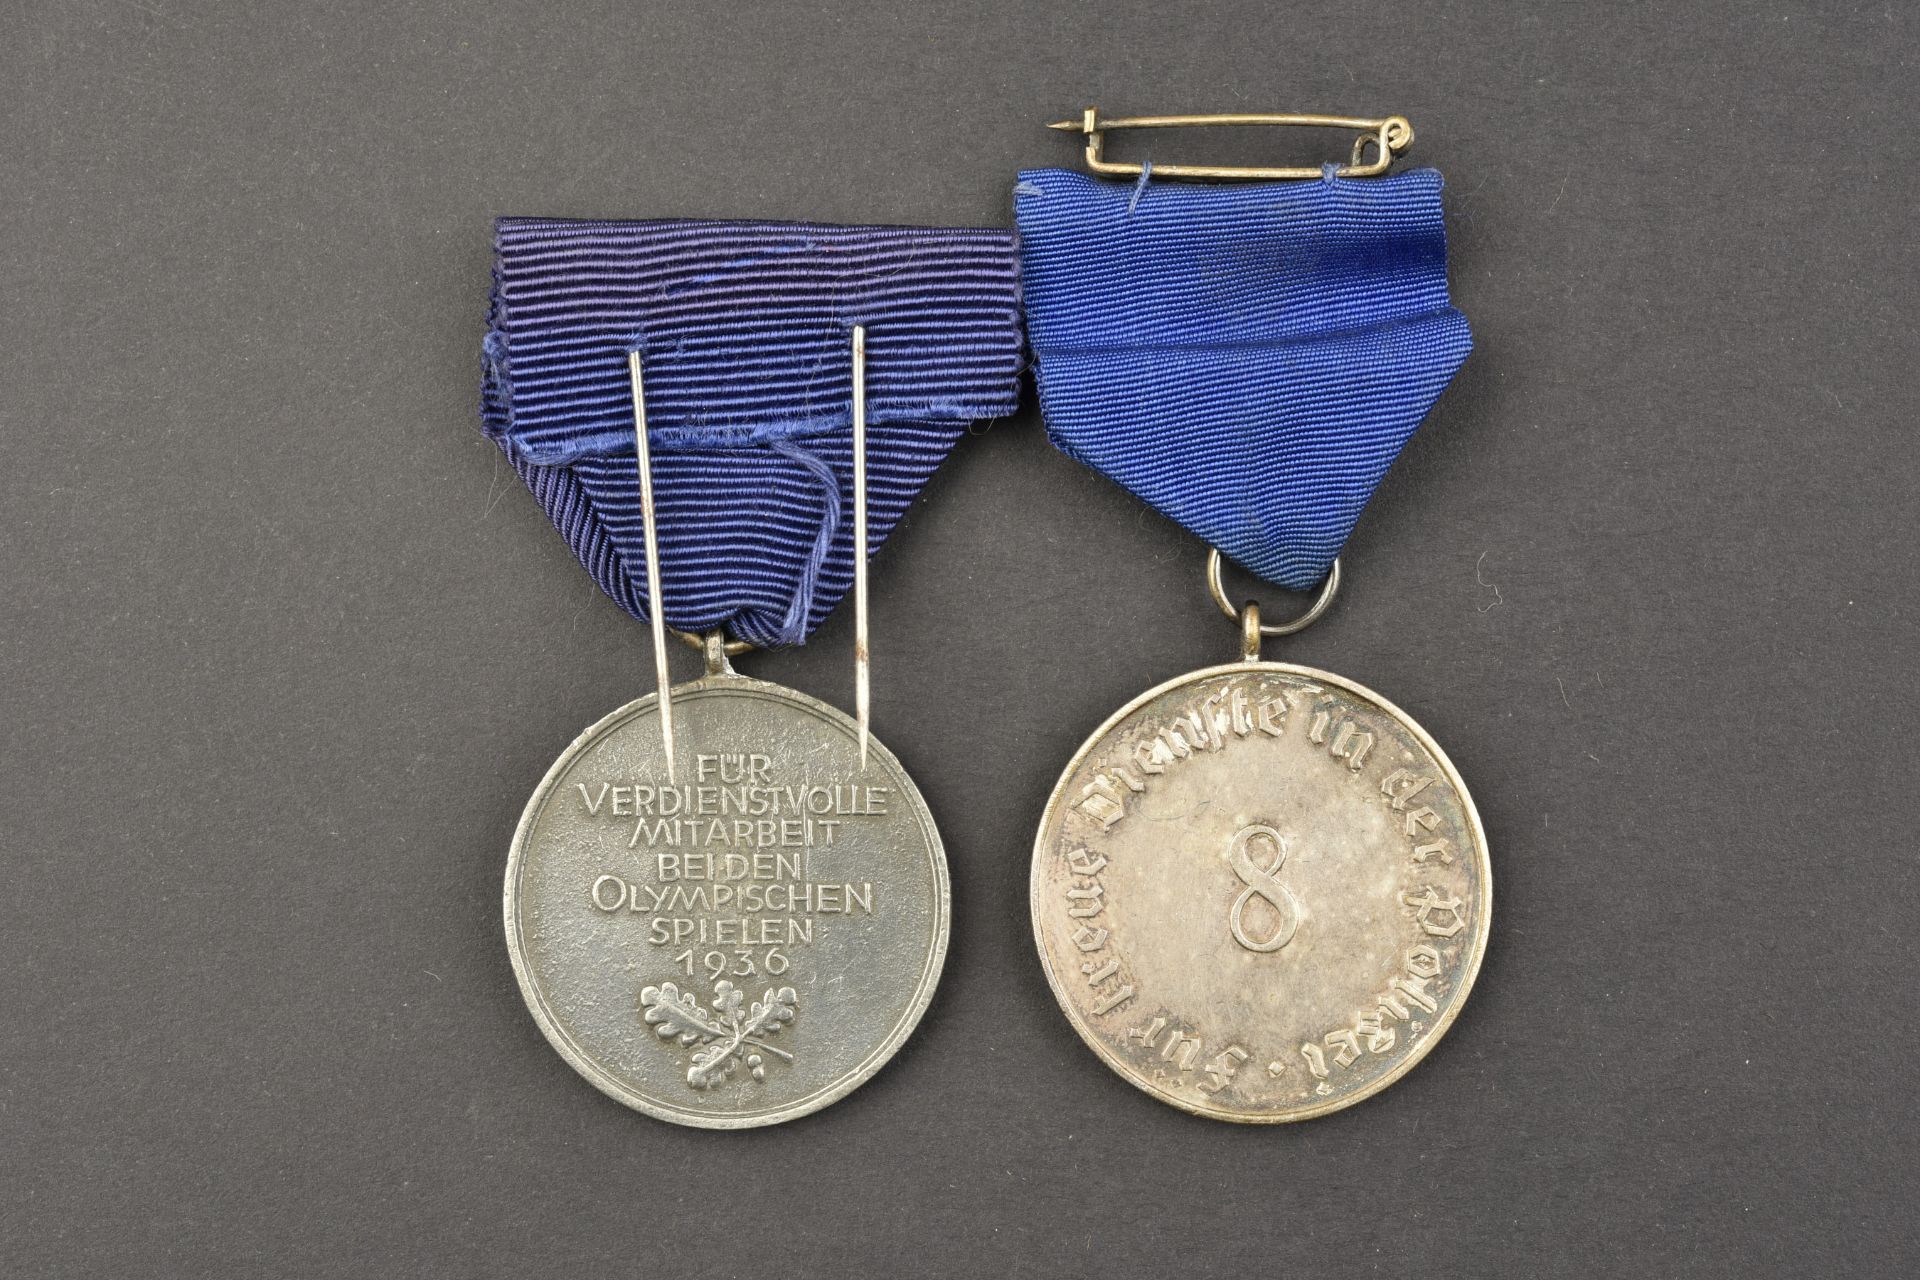 Medailles de service. Service medals. - Image 2 of 2